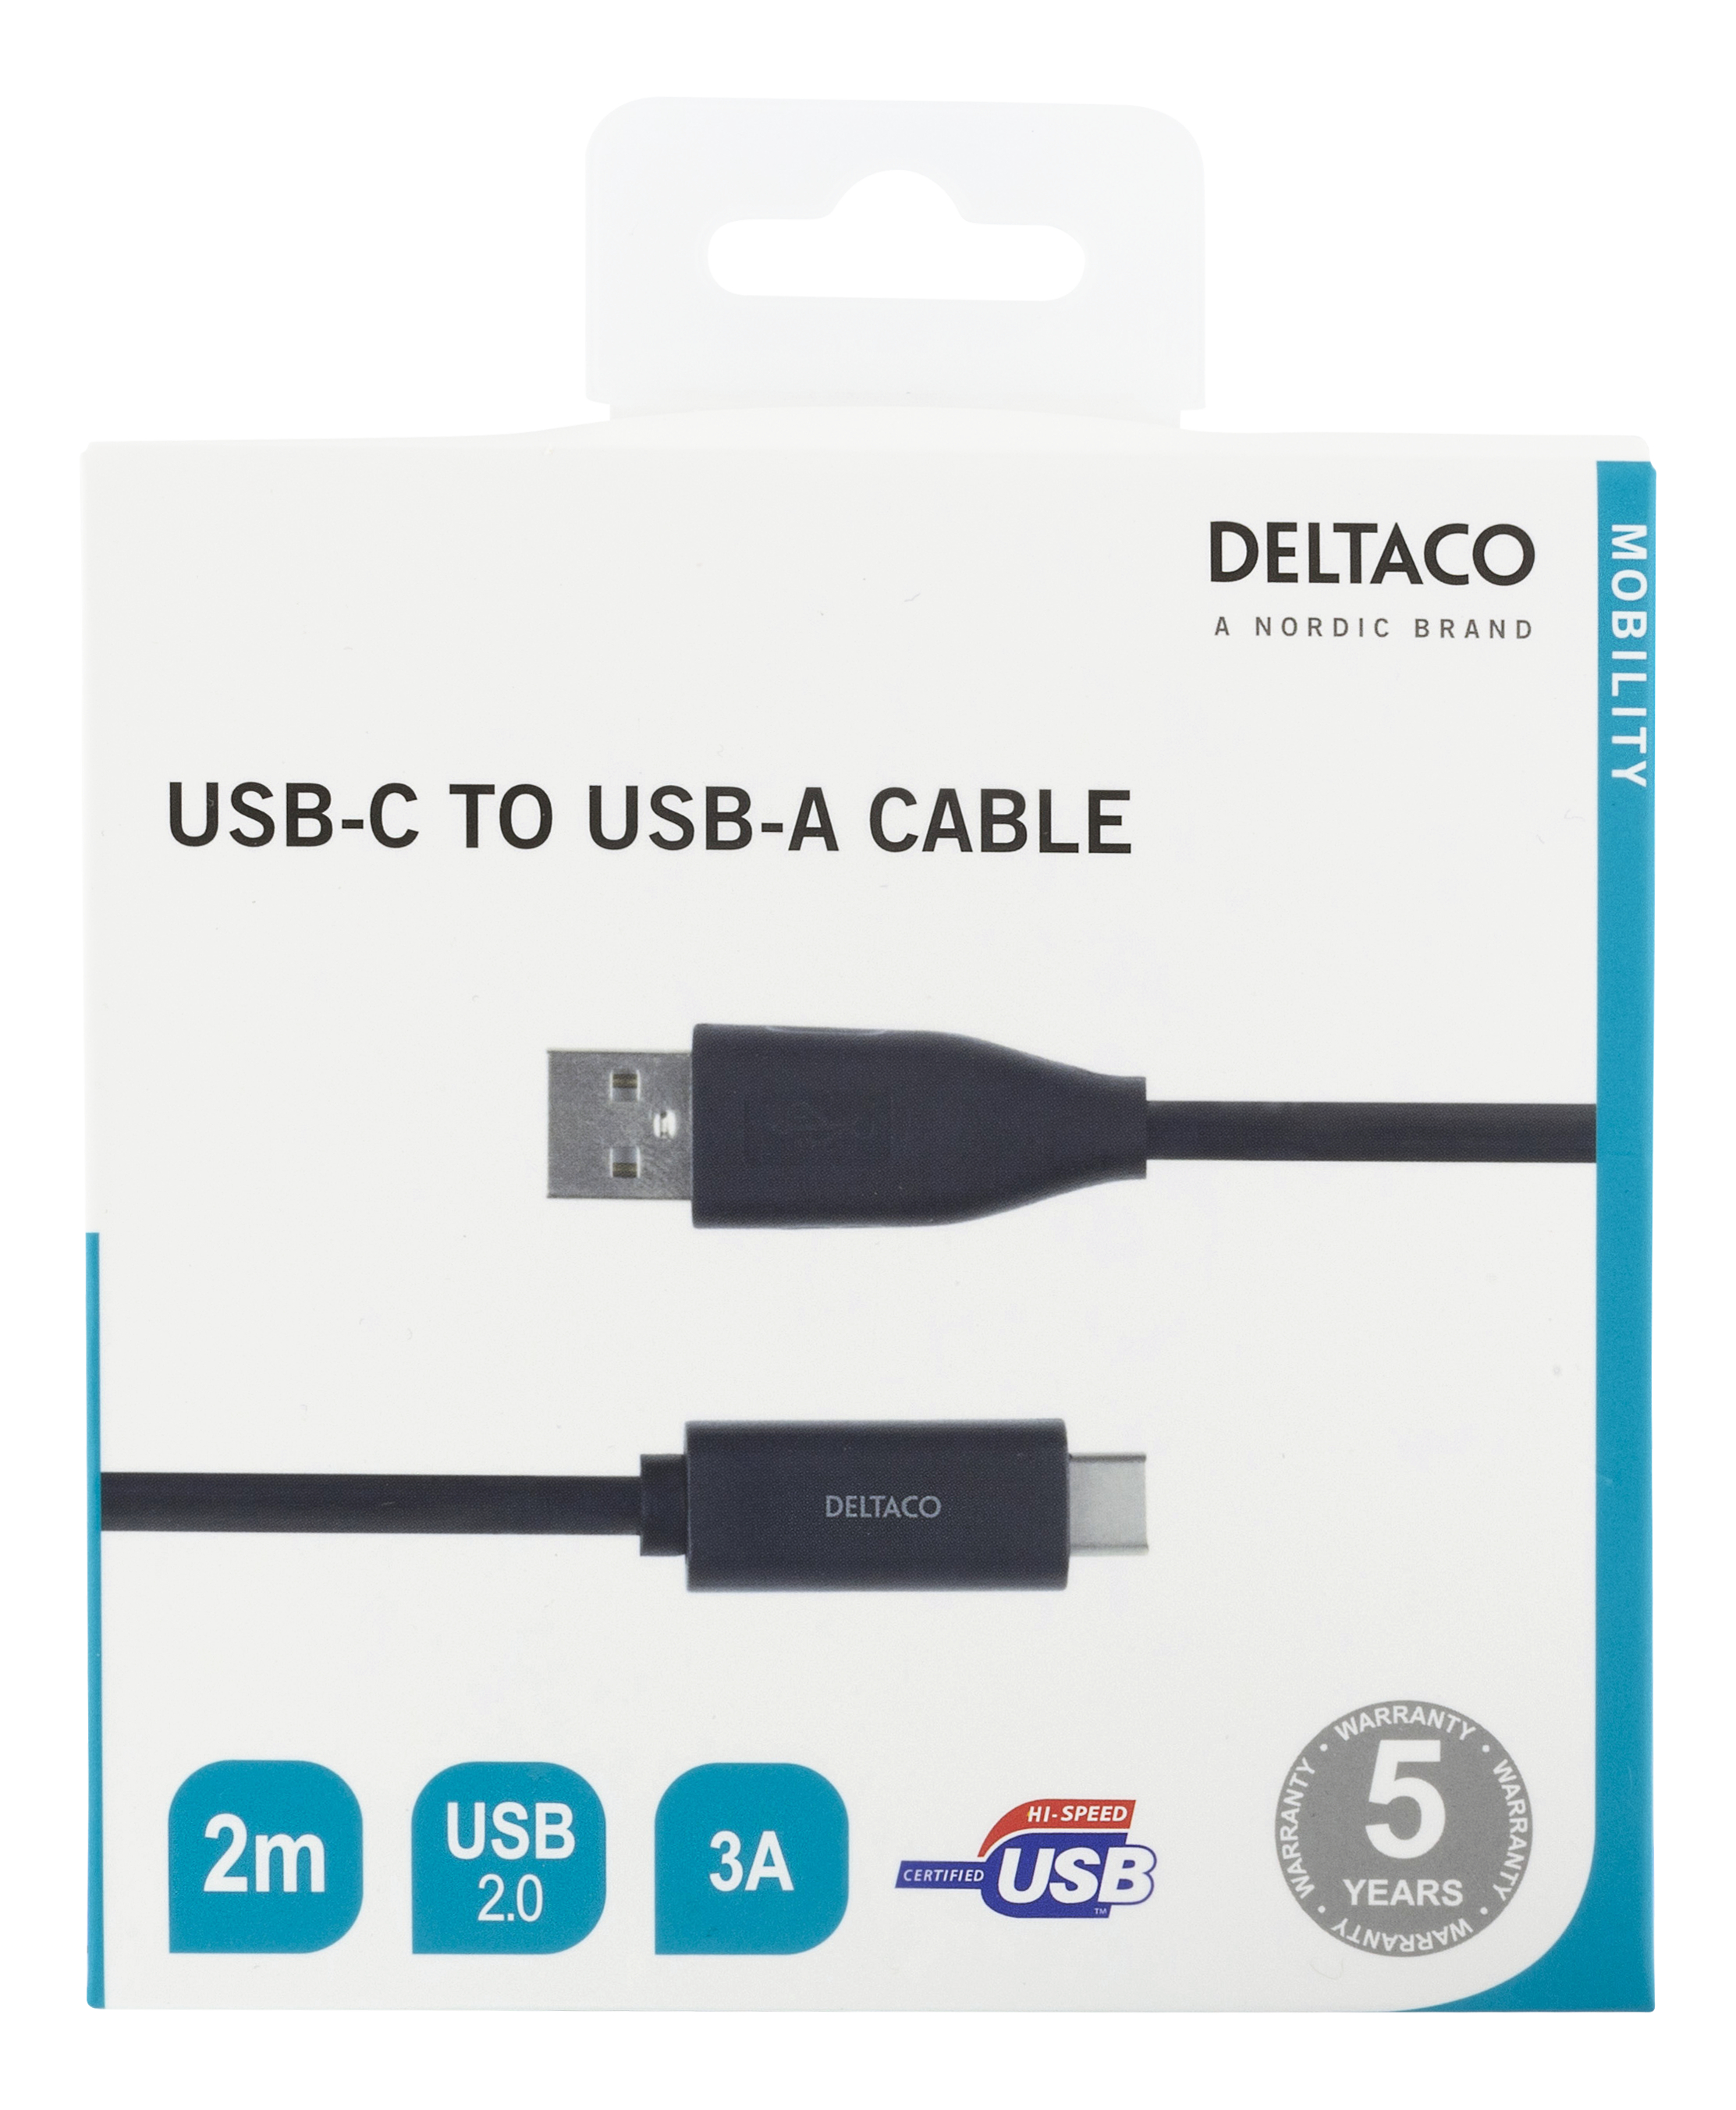 DELTACO USBC-1006M Kabel, Schwarz